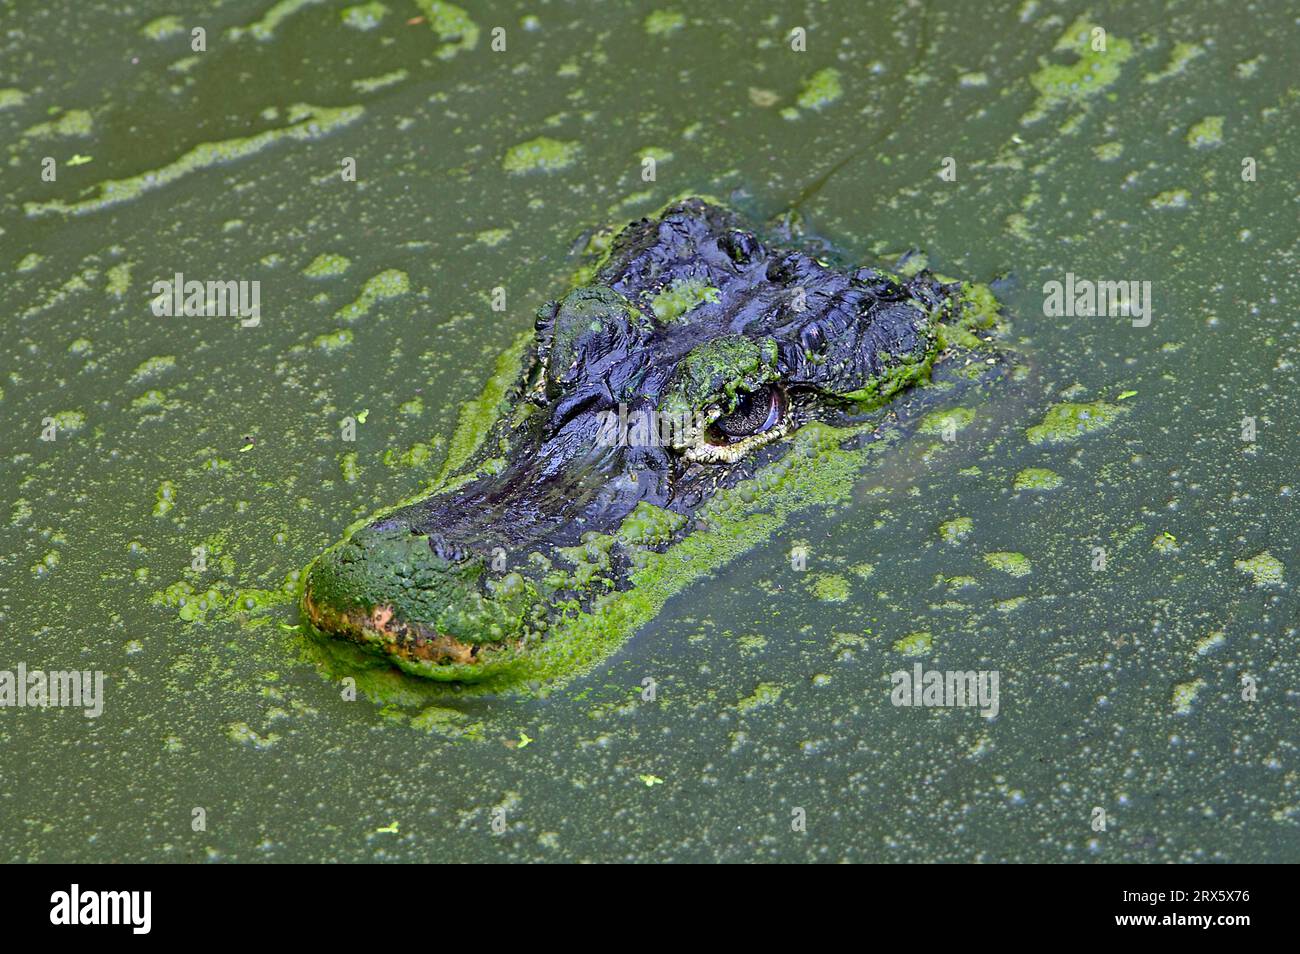 Chinese chinese alligator (Alligator sinensis) Stock Photo